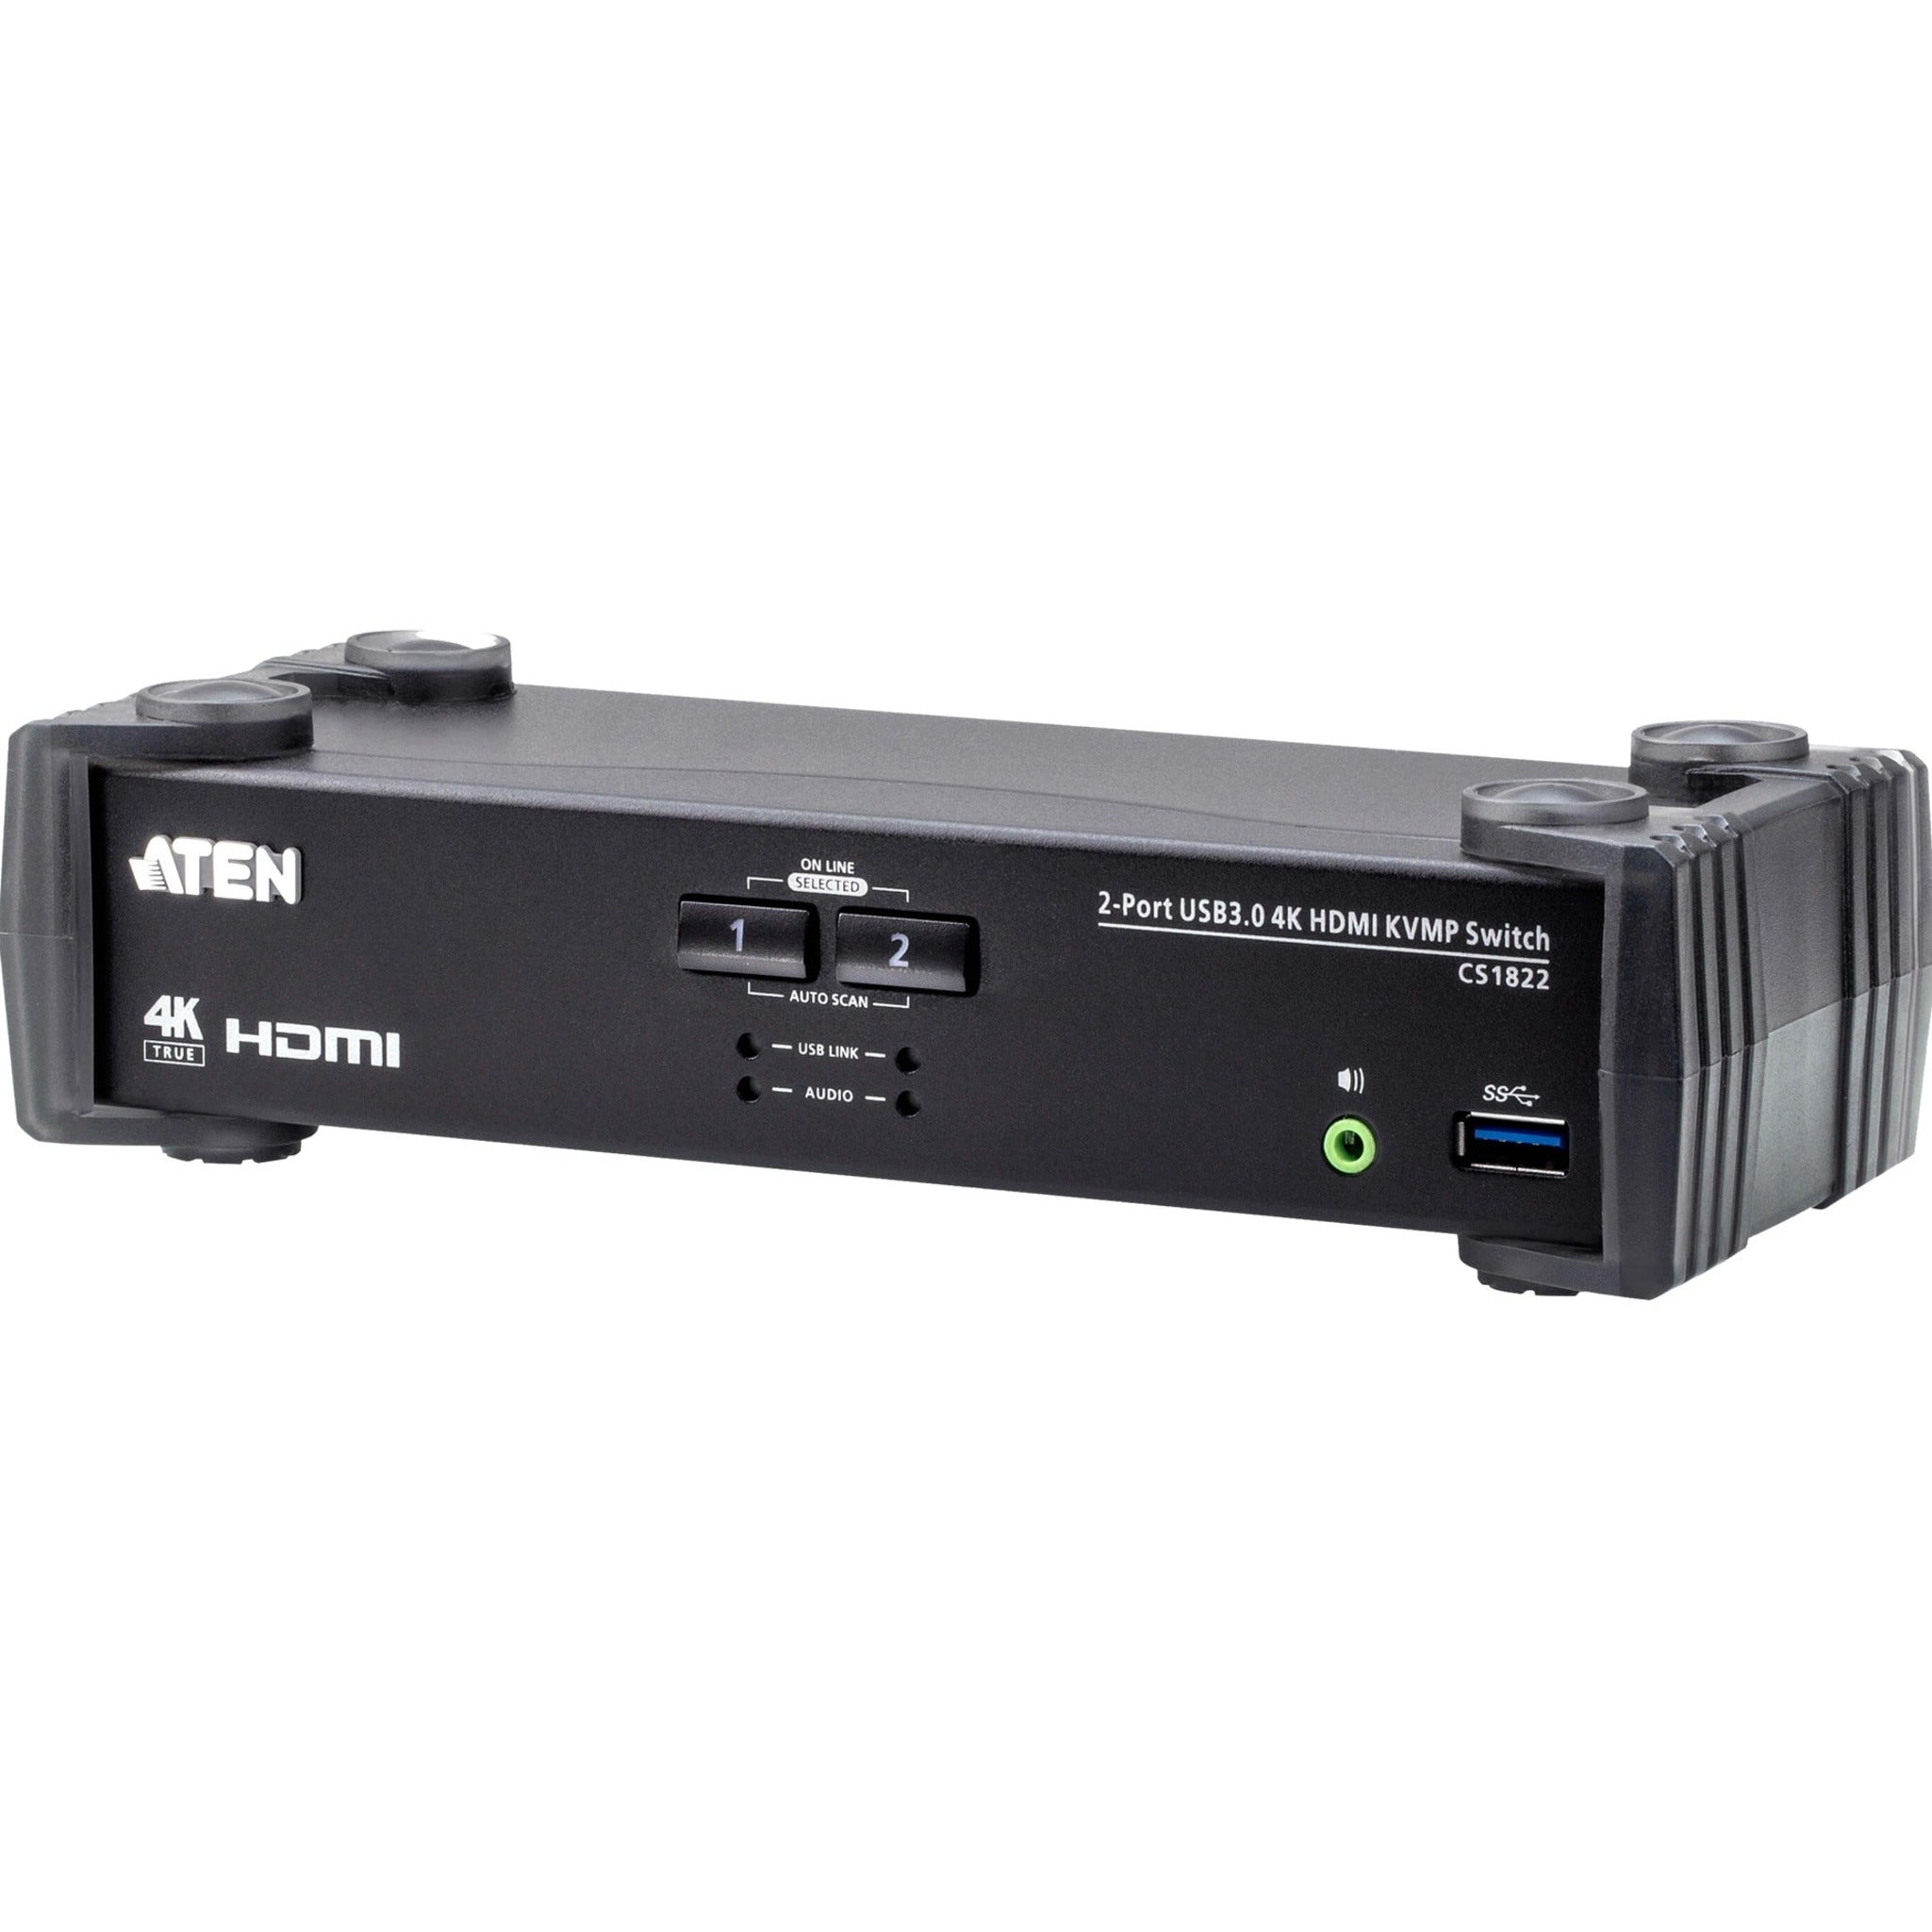 ATEN CS1822 2-Port USB 3.0 4K HDMI KVMP Switch Maximum Video Resolution 4096 x 2160